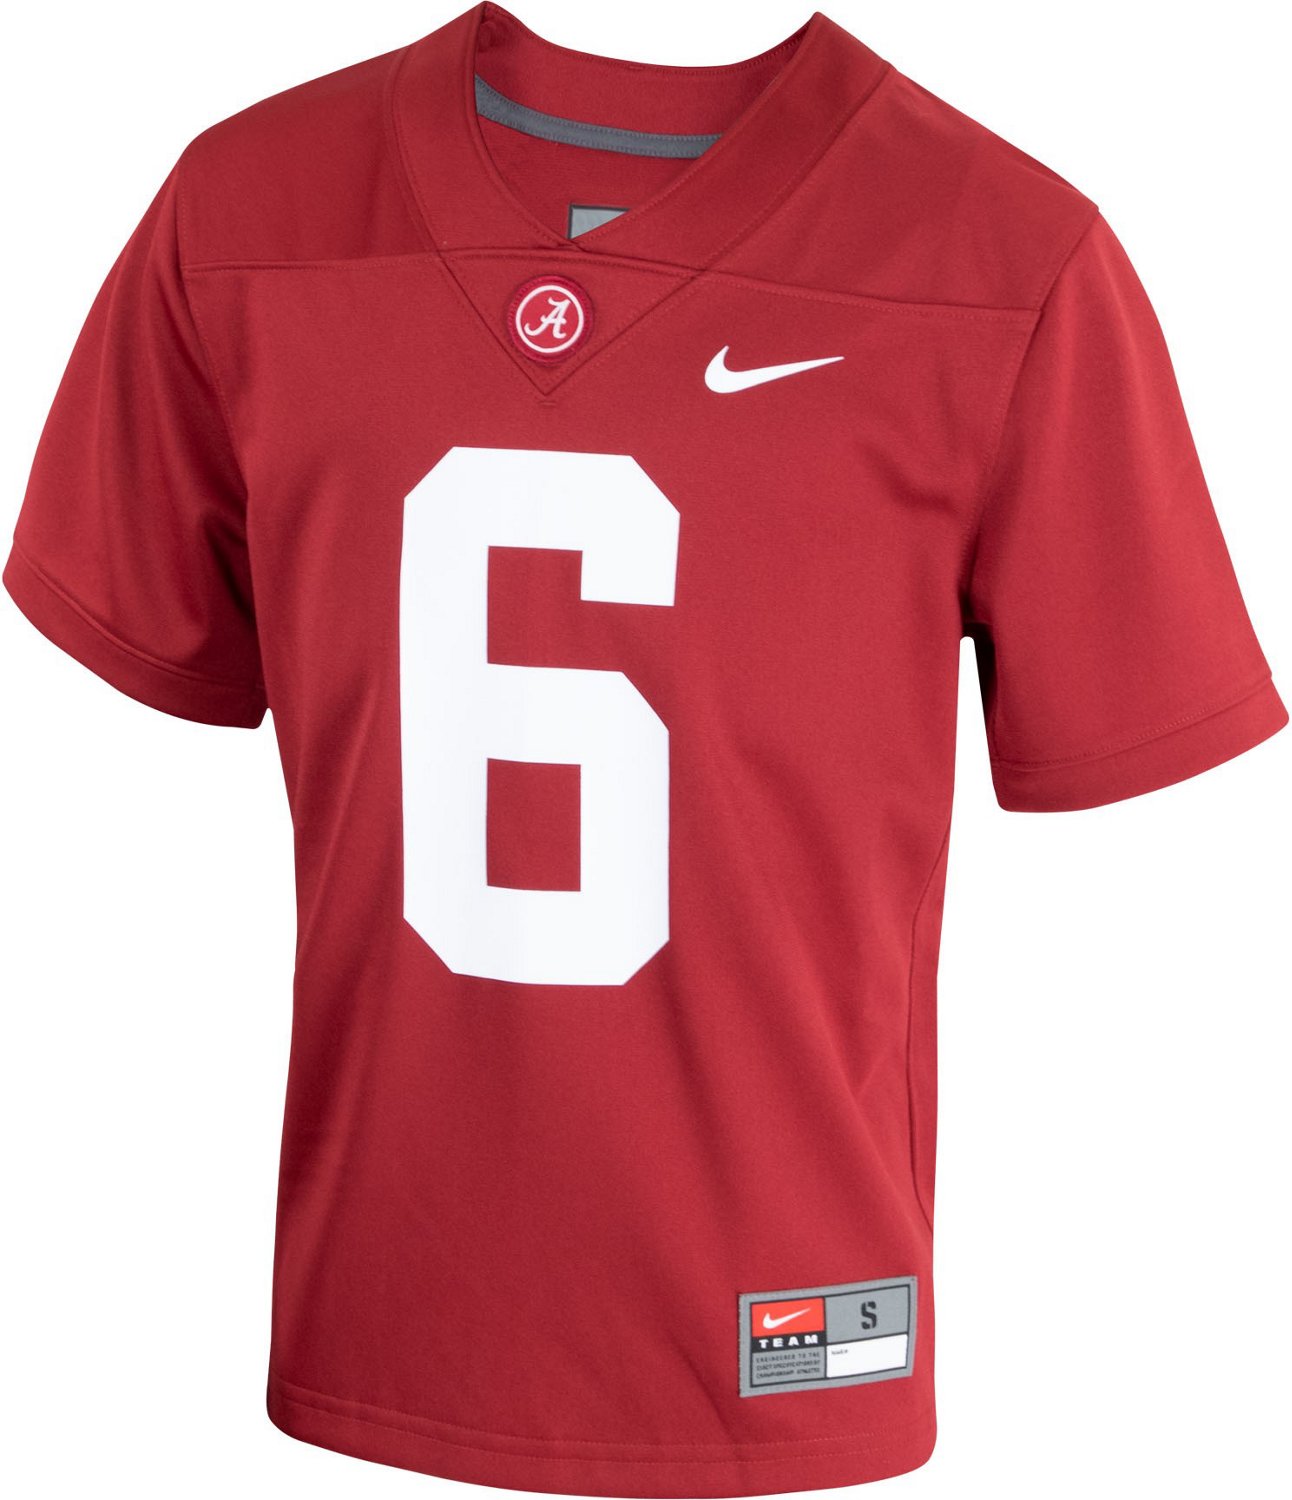 Nike Youth University of Alabama Smith Replica Football Jersey